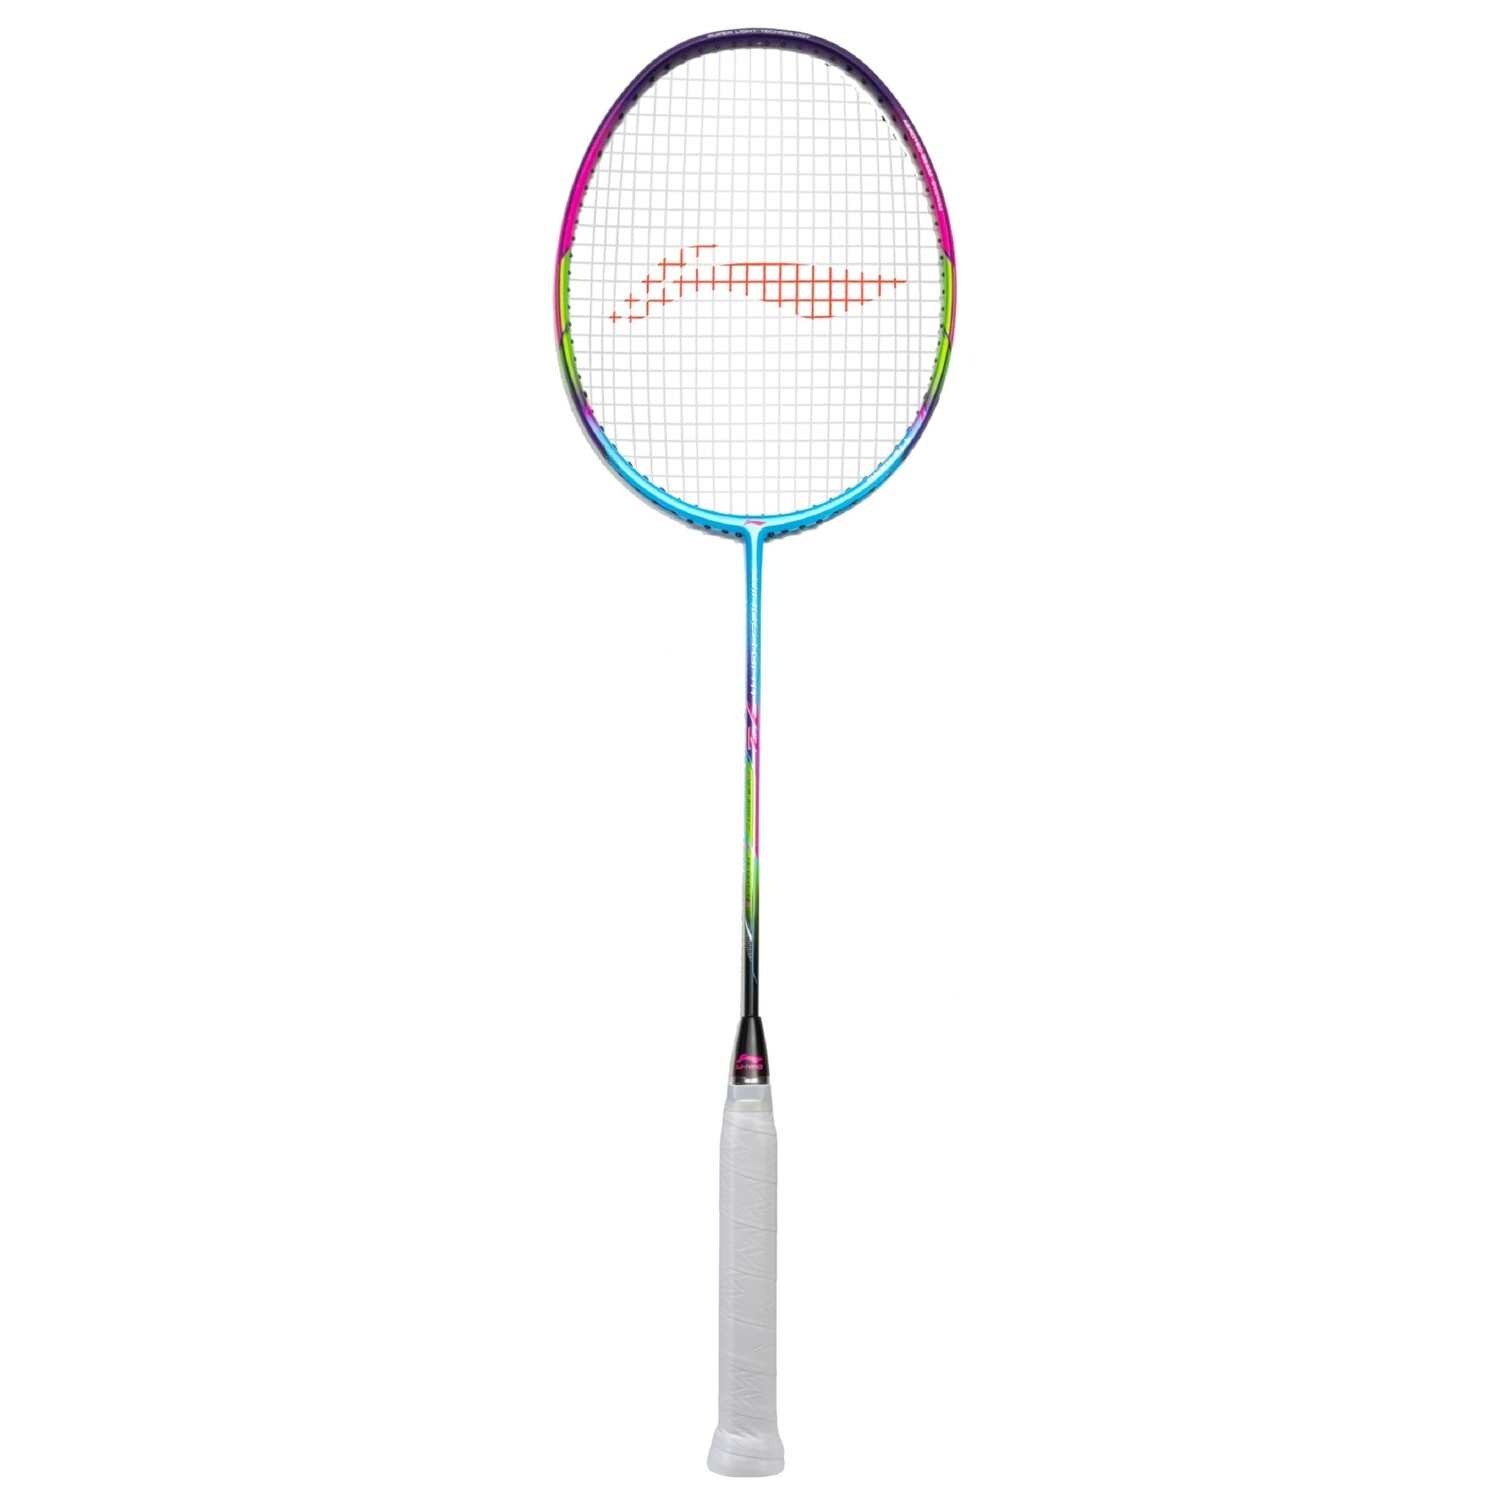 LI-NING WINDSTORM 72 - BLUE/PURPLE
Badminton Racquet